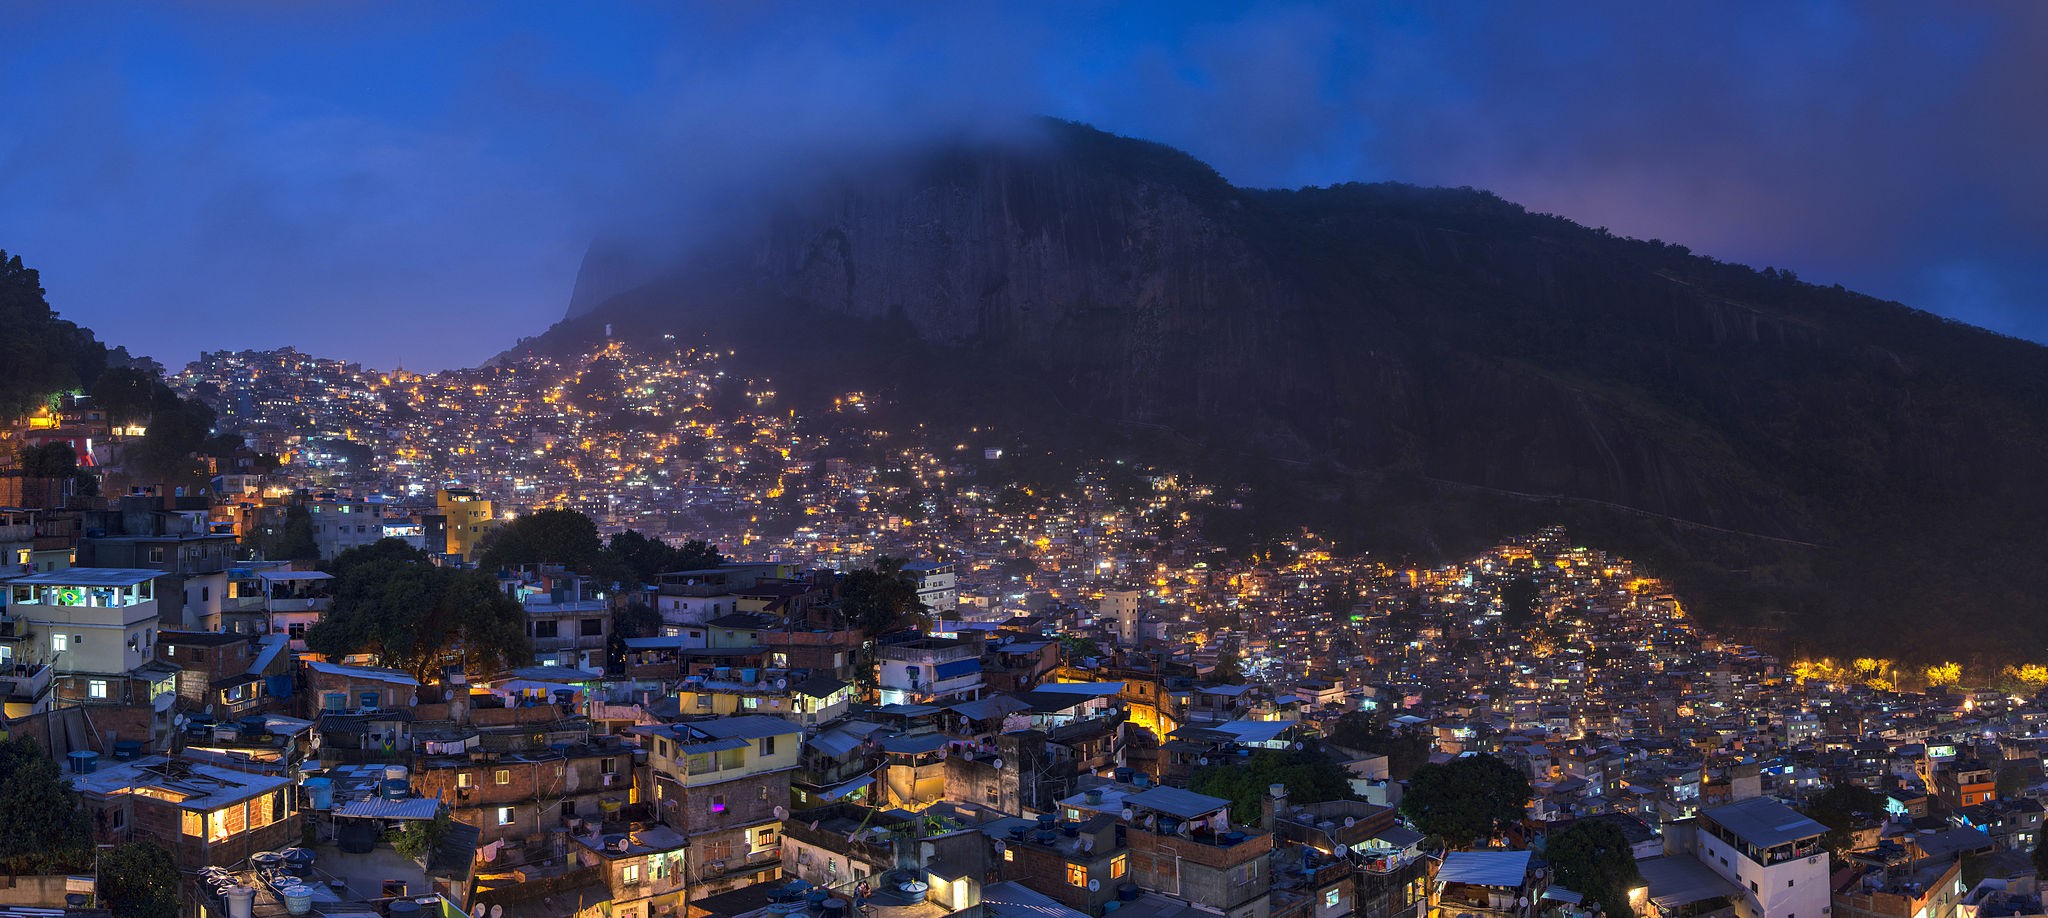 General 2048x918 Rio de Janeiro Brazil favela cityscape city lights